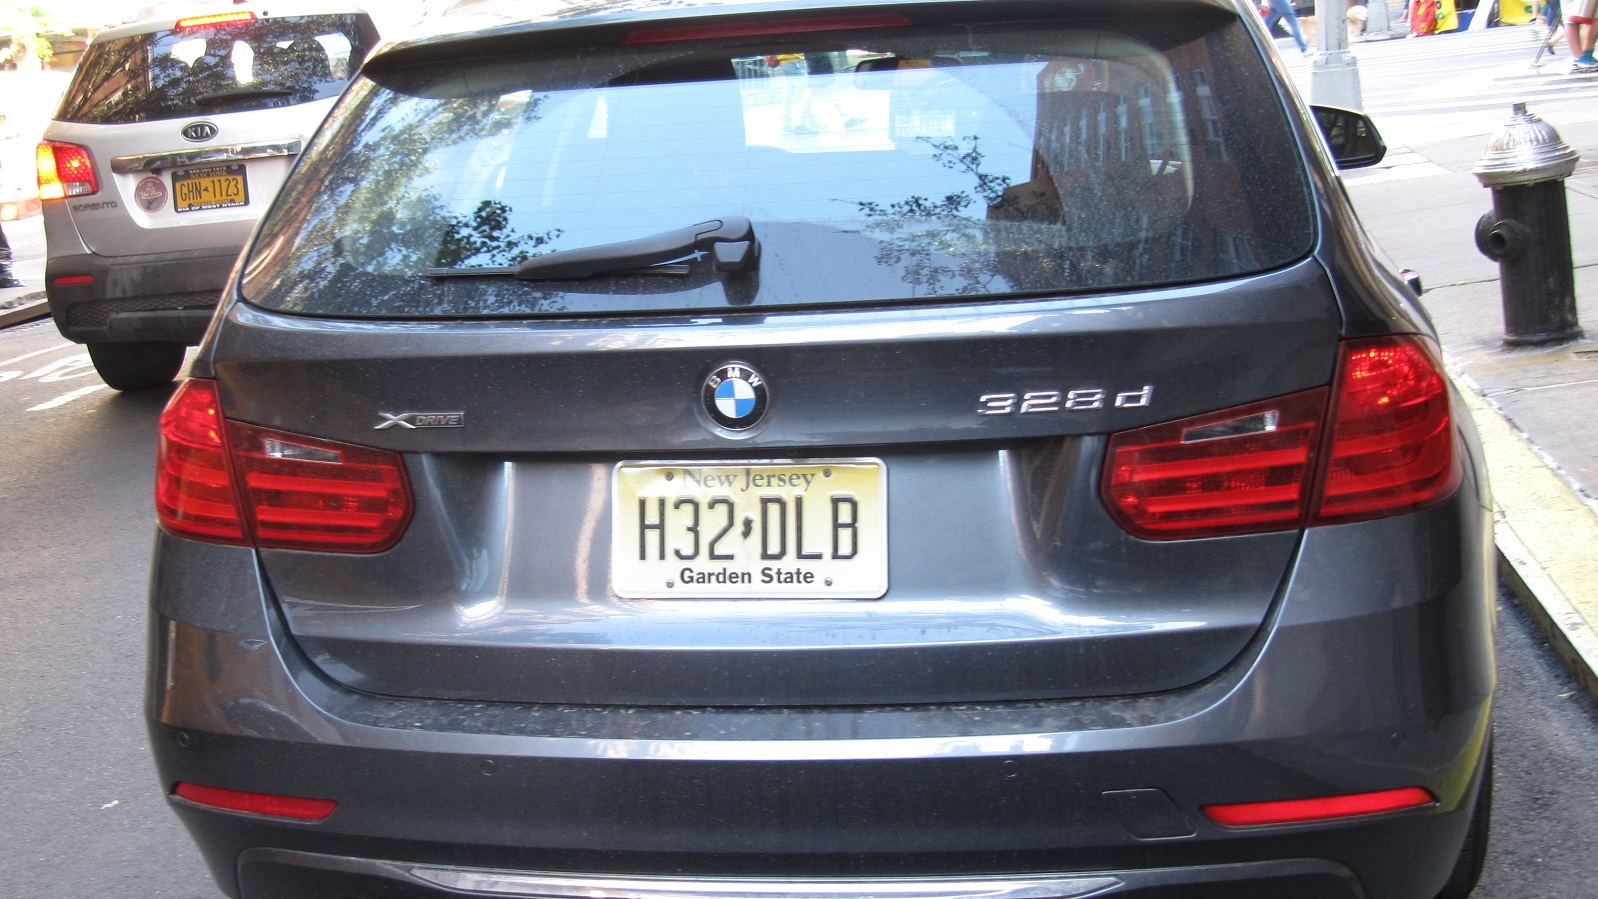 2014 BMW 328d xDrive Sport Wagon, New York City, Jun 2014